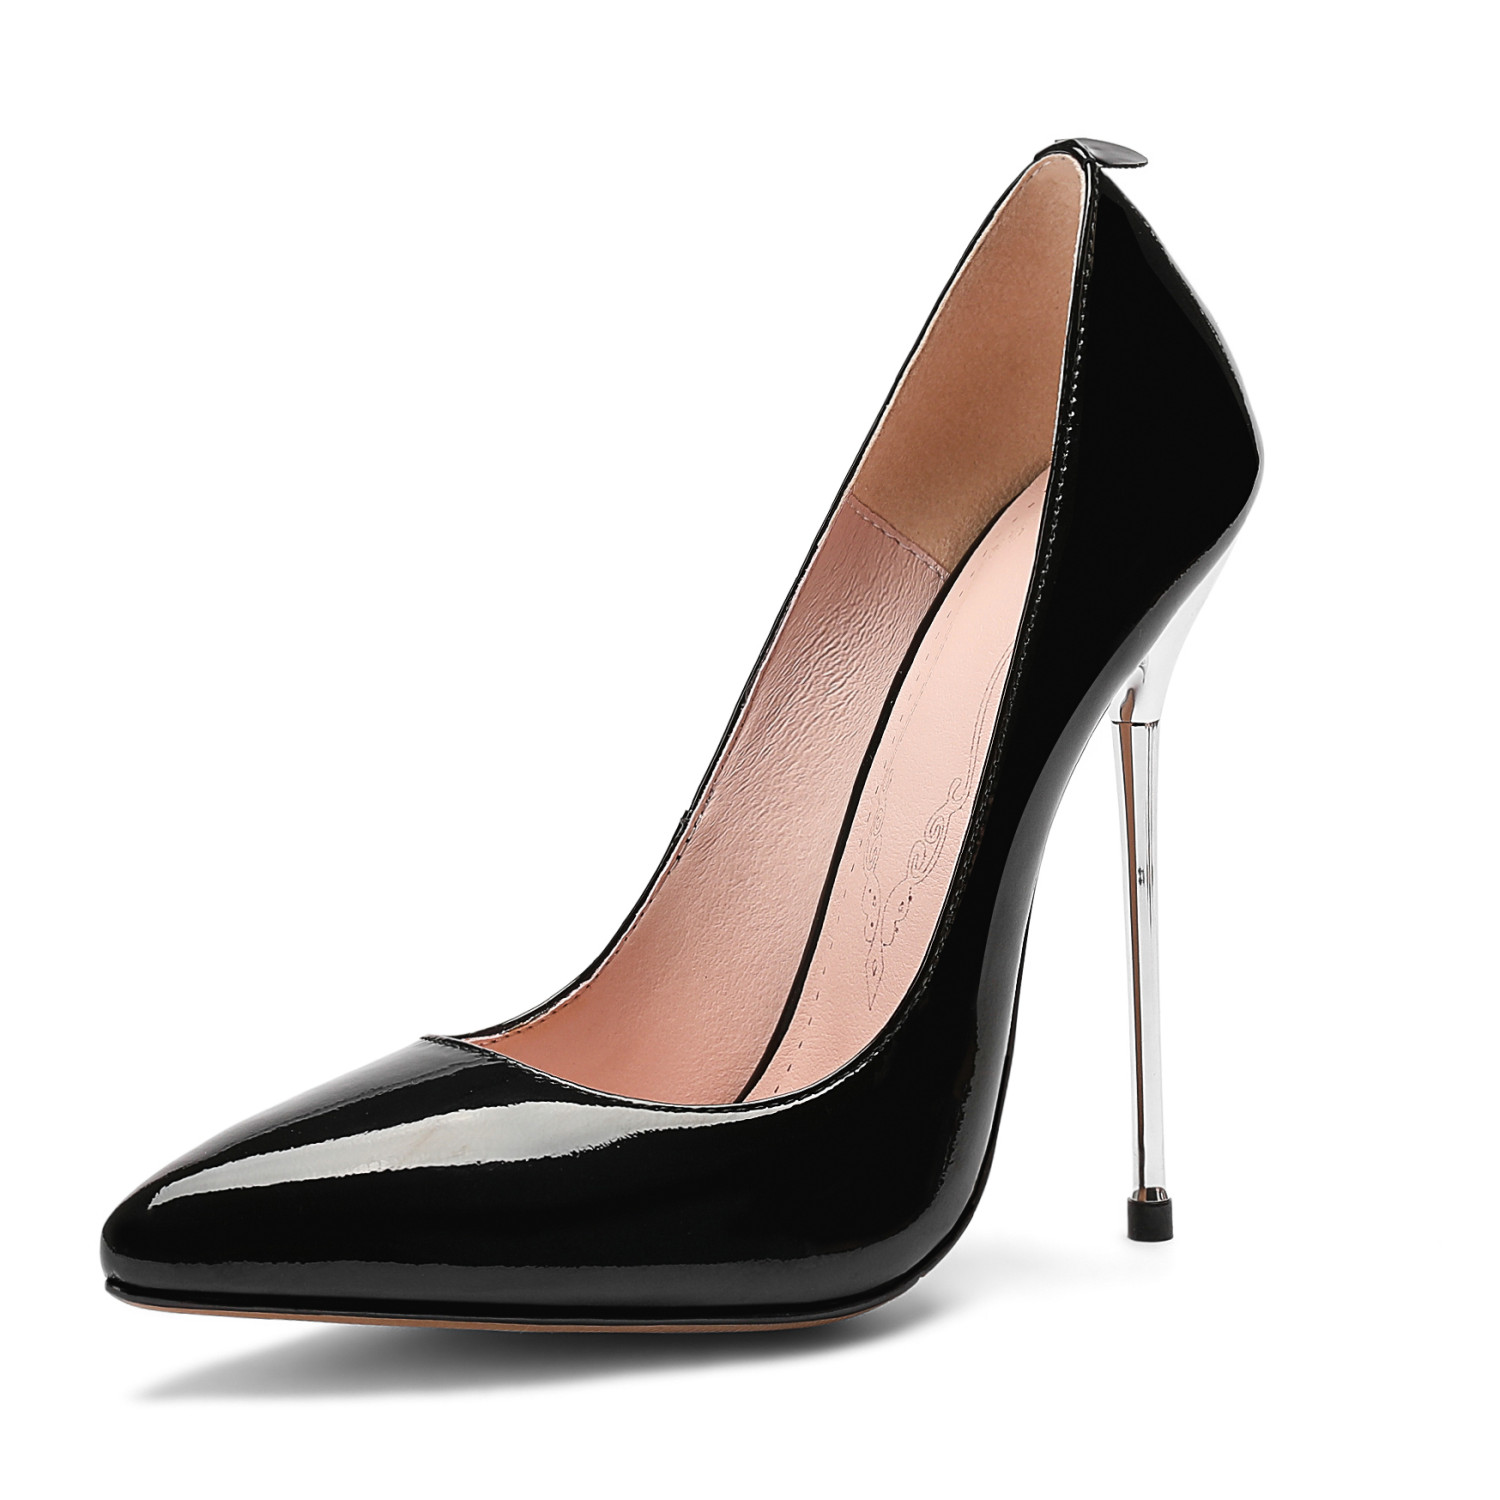 US$ 51.00 - Arden Furtado Summer Fashion Women's Shoes Pointed Toe ...